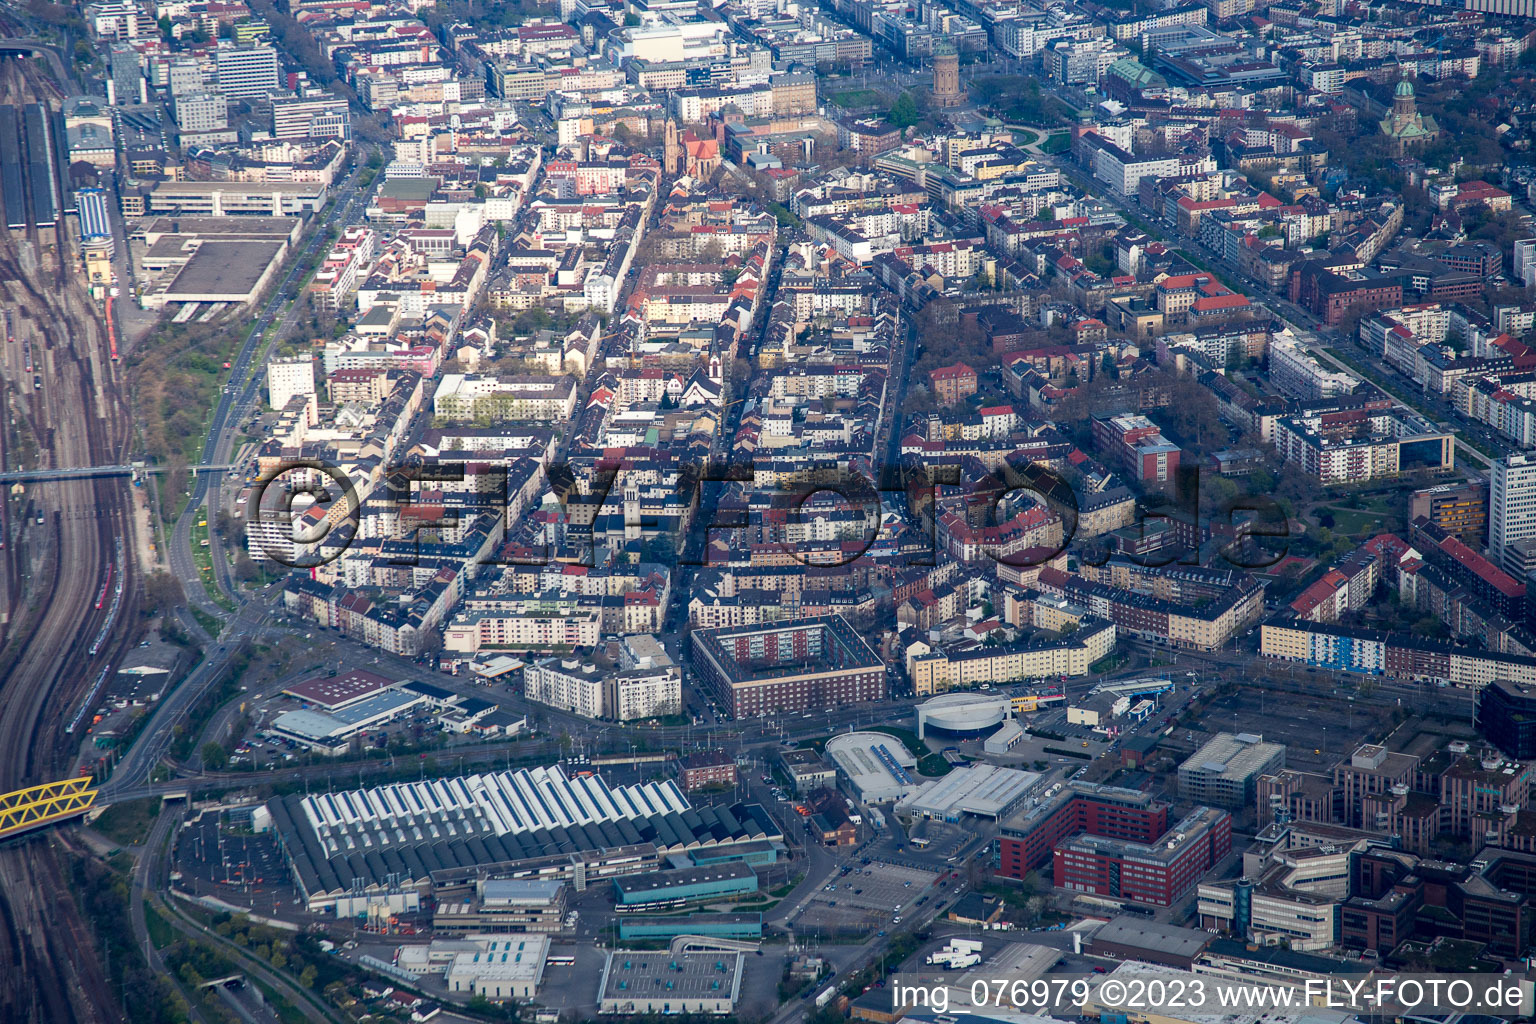 Aerial view of District Schwetzingerstadt in Mannheim in the state Baden-Wuerttemberg, Germany